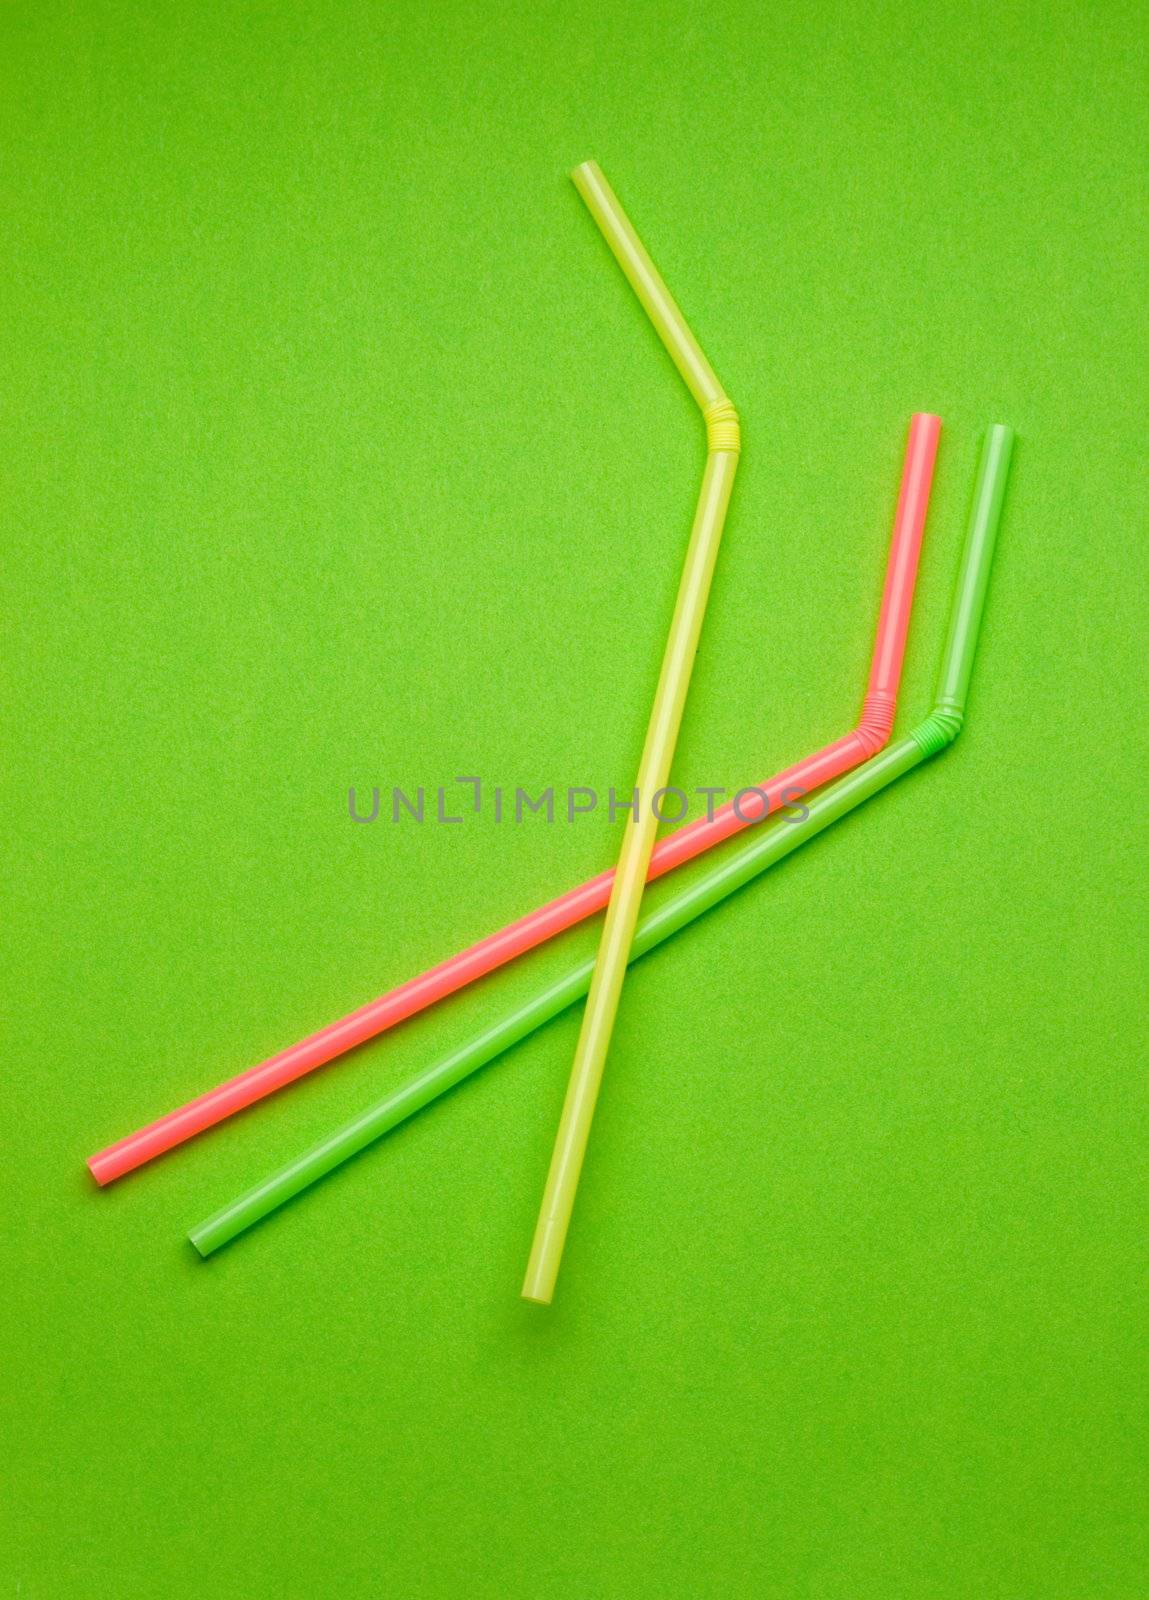 Straws isolated on green by Garsya